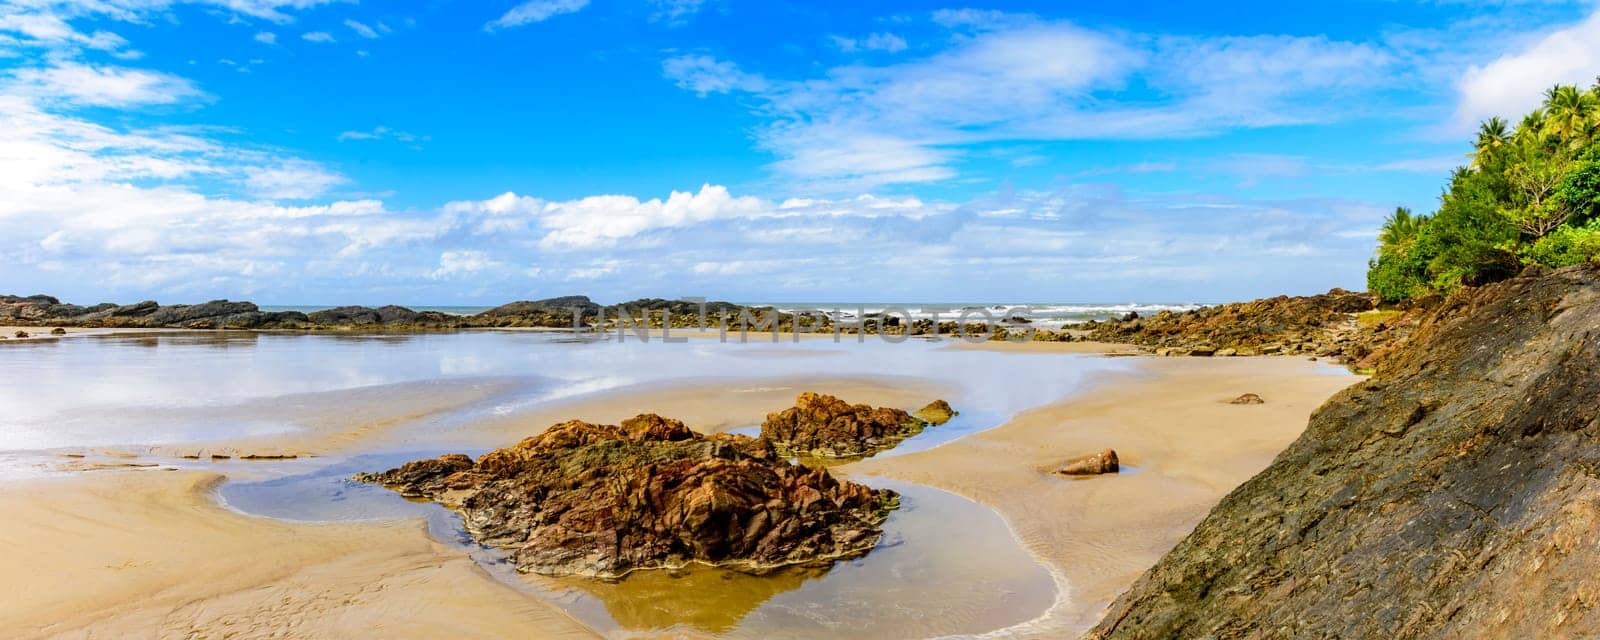 Panoramic image of beautiful Prainha beach by Fred_Pinheiro